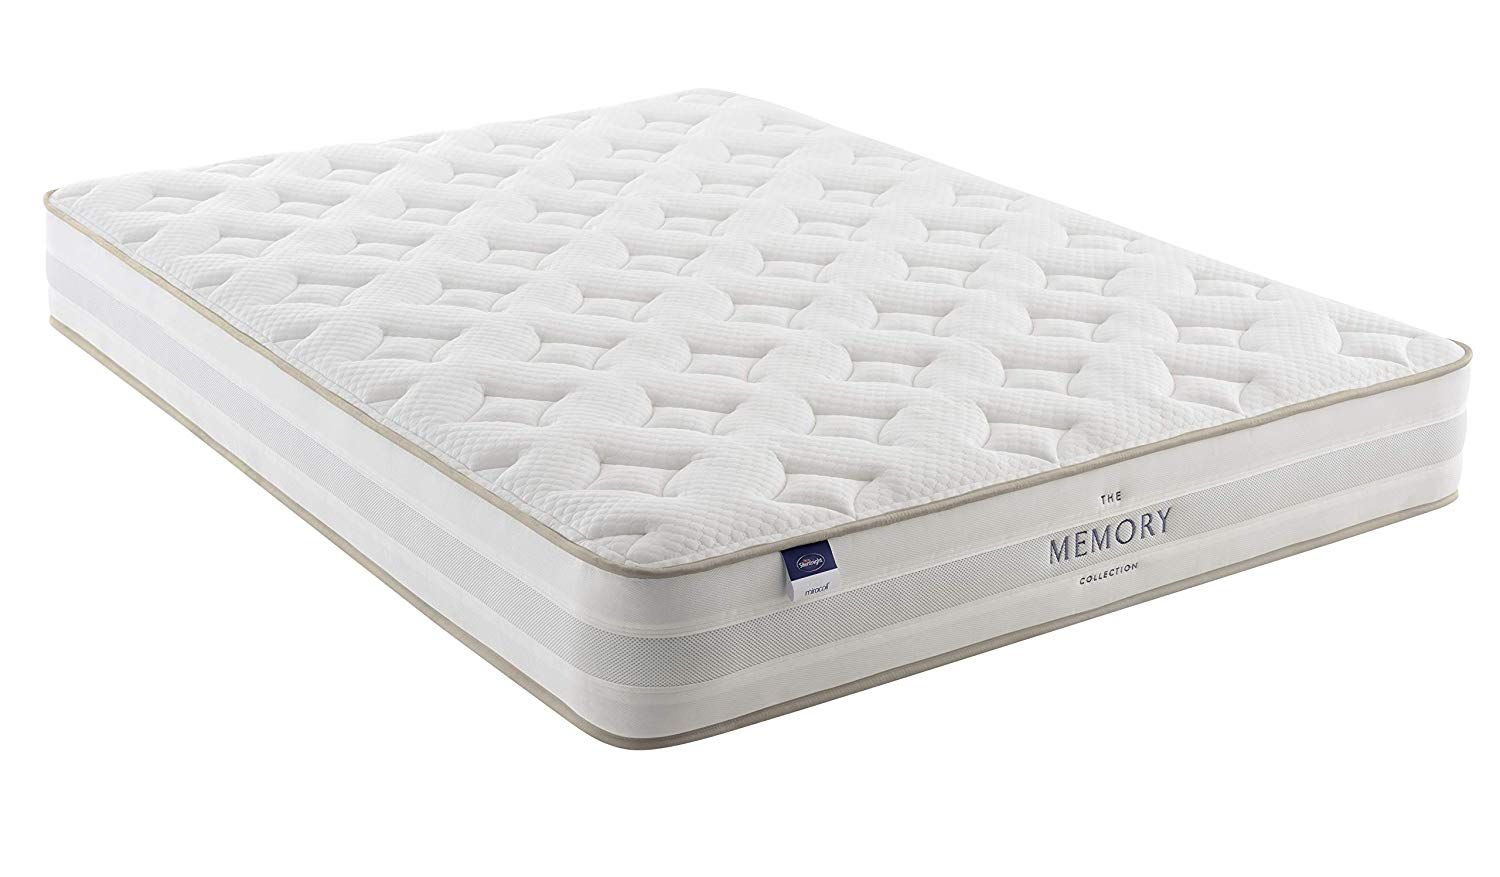 silent night mattress now review